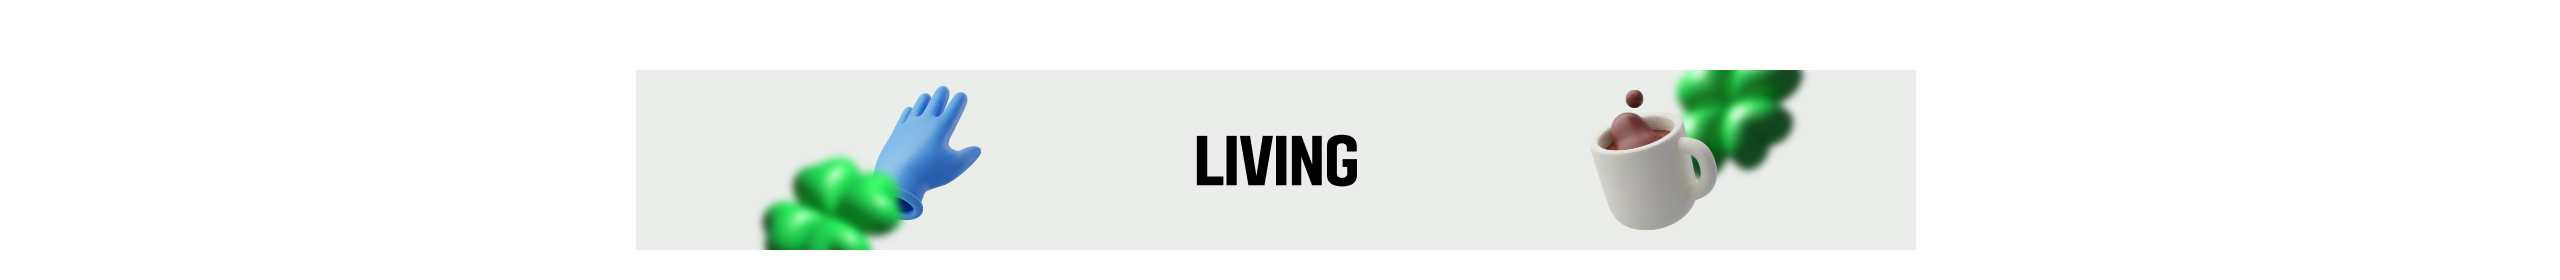 LIVING